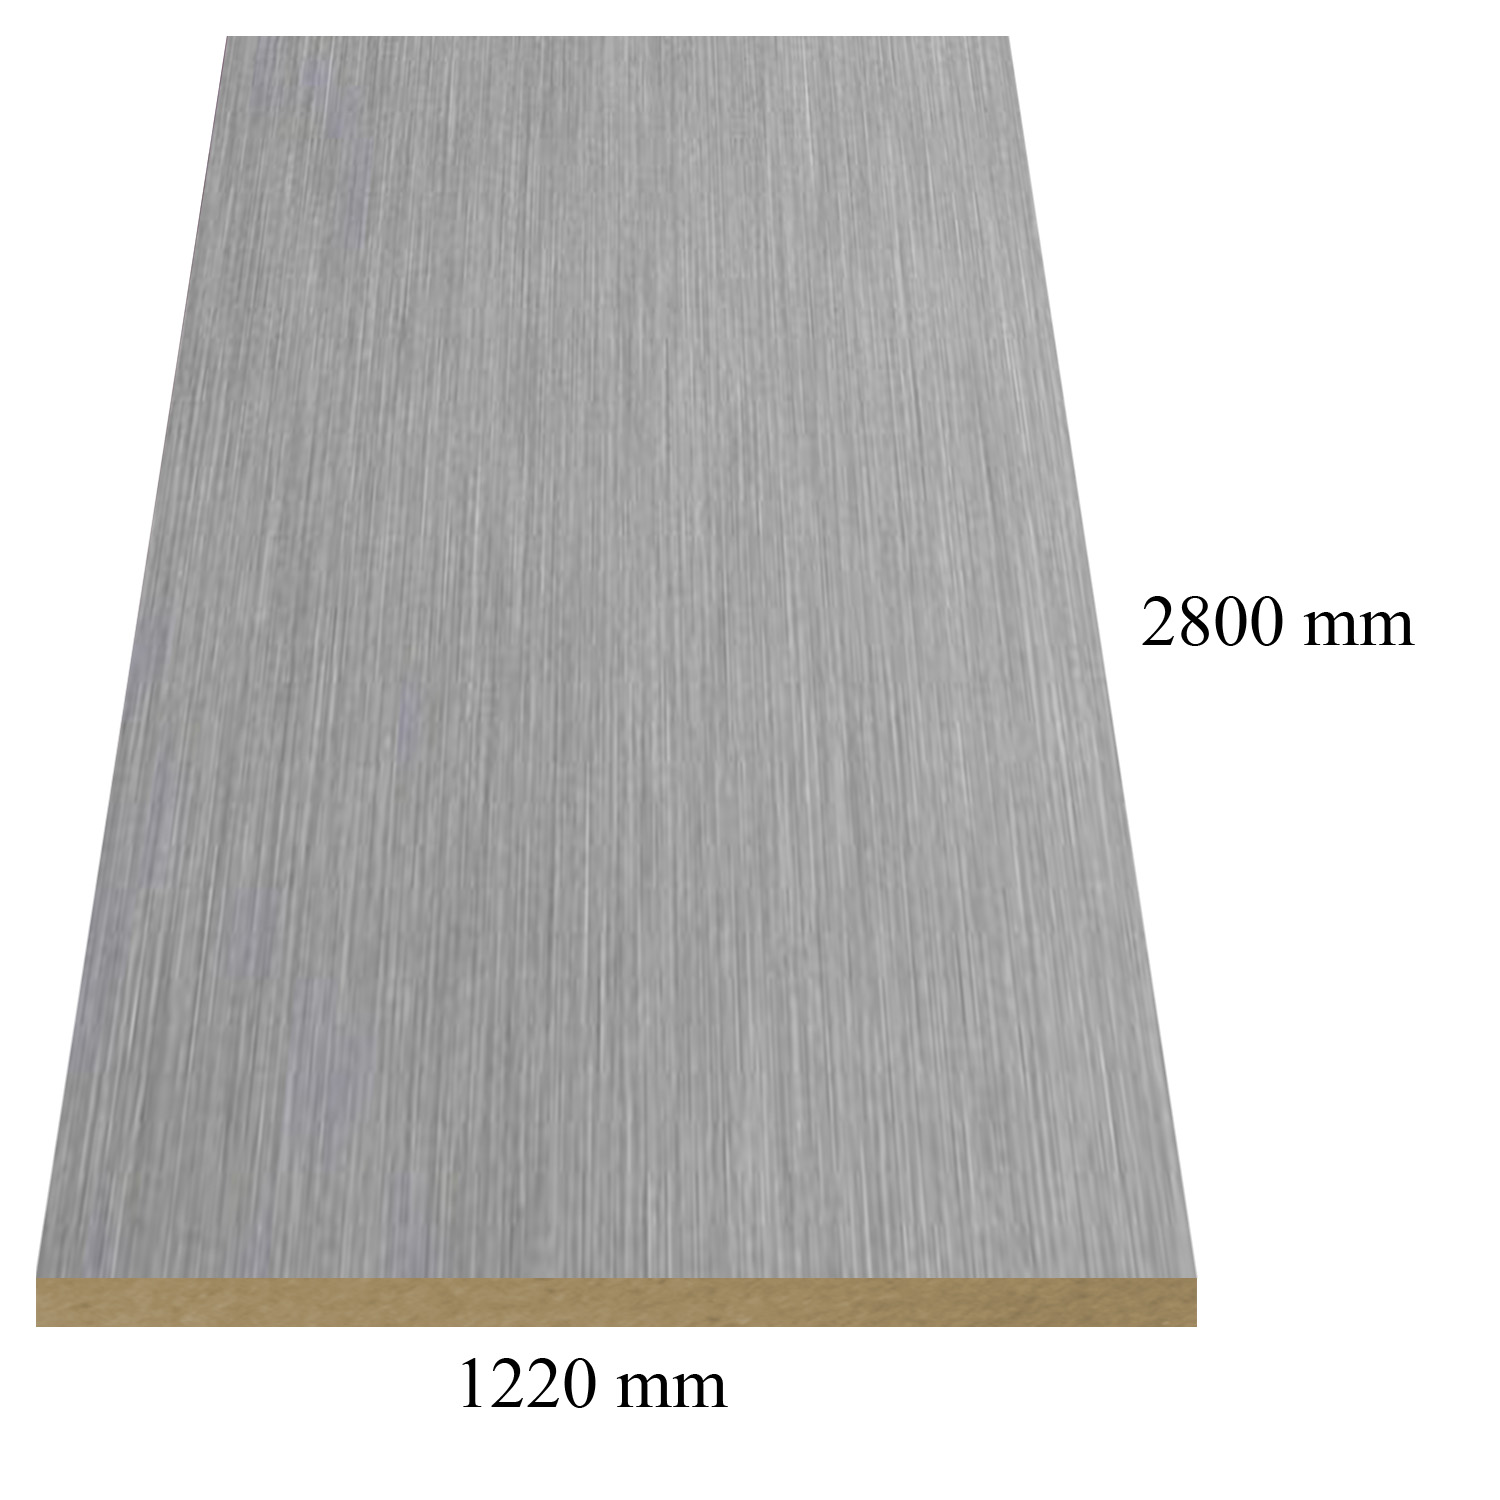 67 /6170 Inox - PVC coated 18 mm MDF